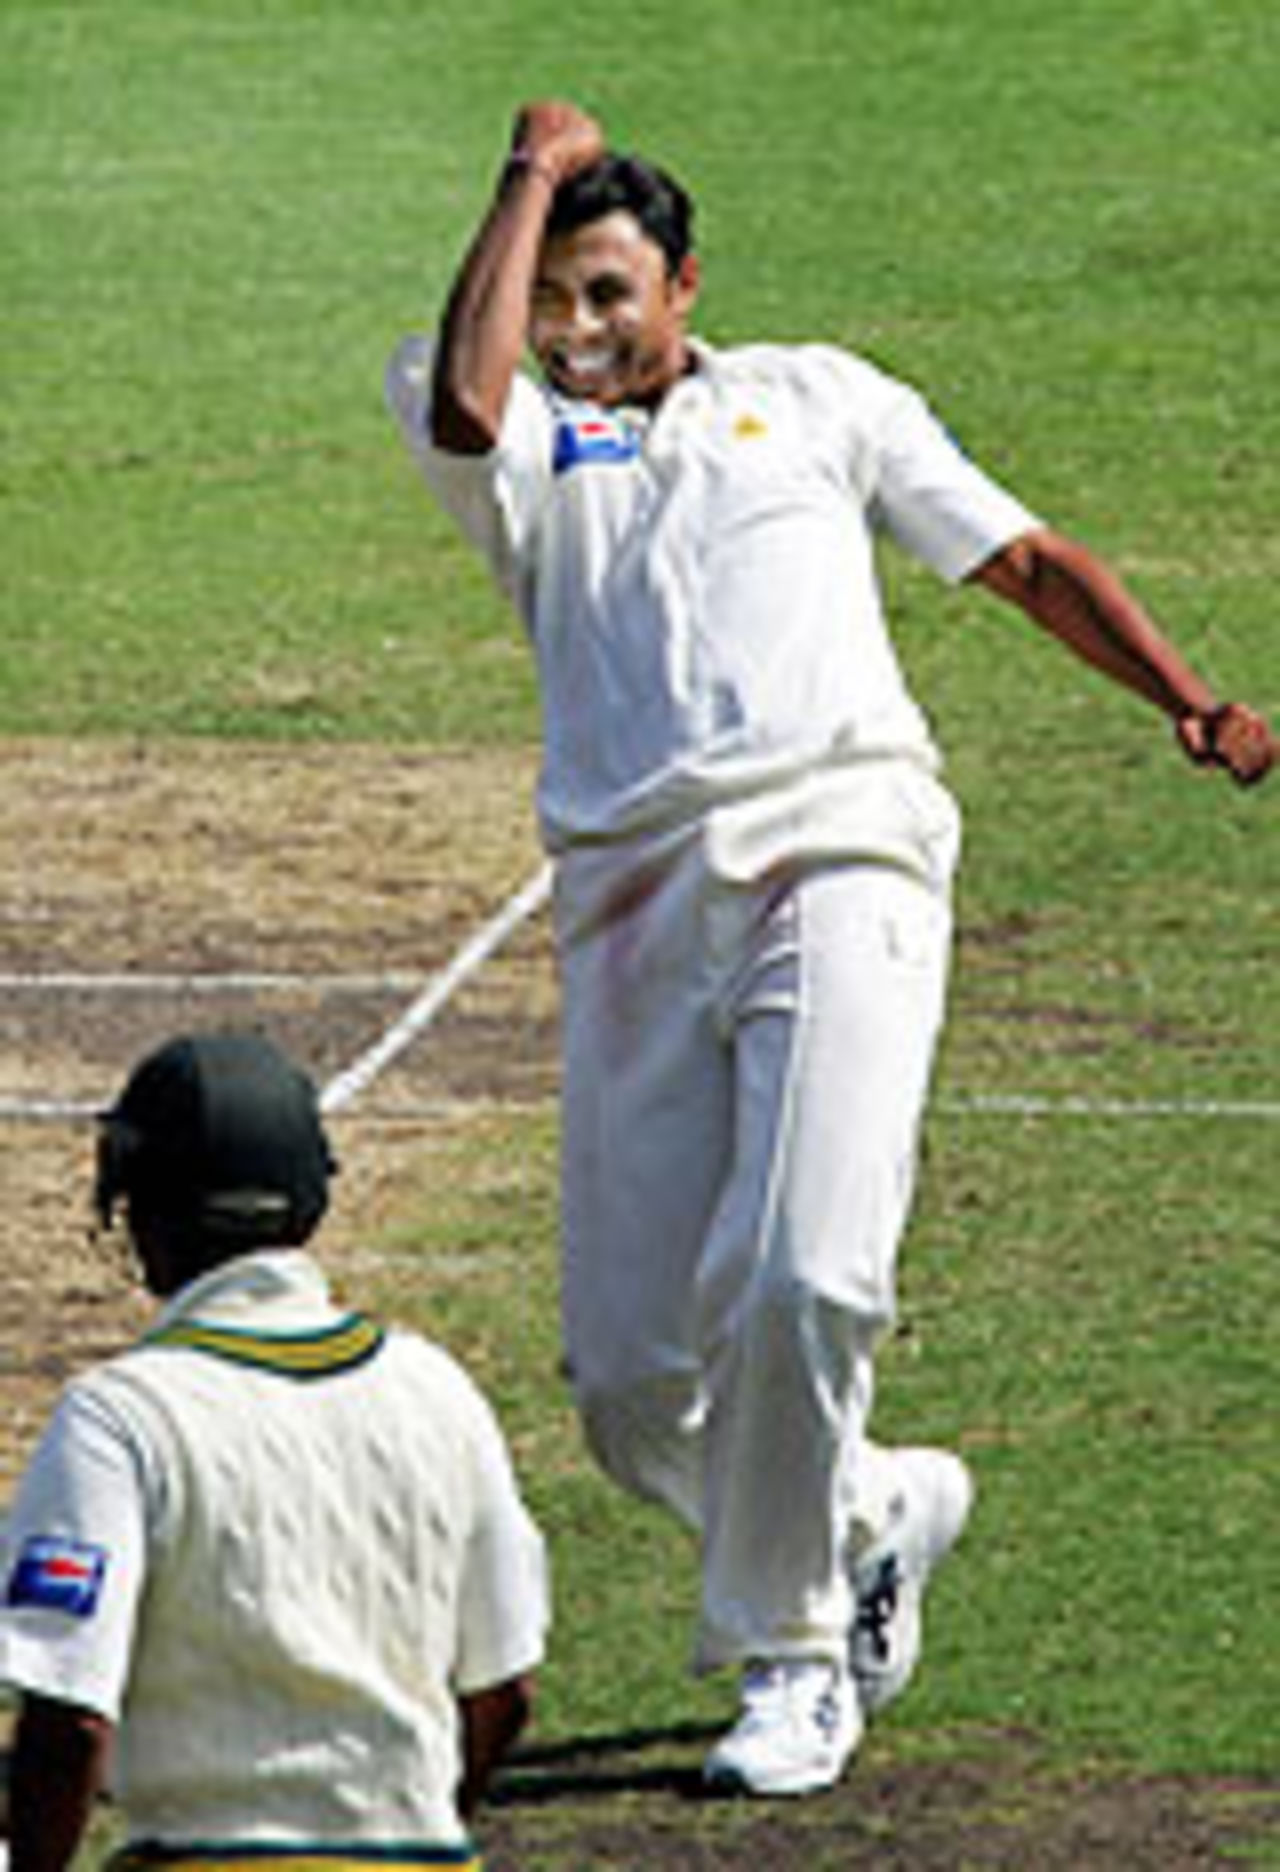 Danish Kaneria is jubilant after dismissing Damien Martyn, Australia v Pakistan, 3rd Test, Sydney, 2nd day, January 3, 2005